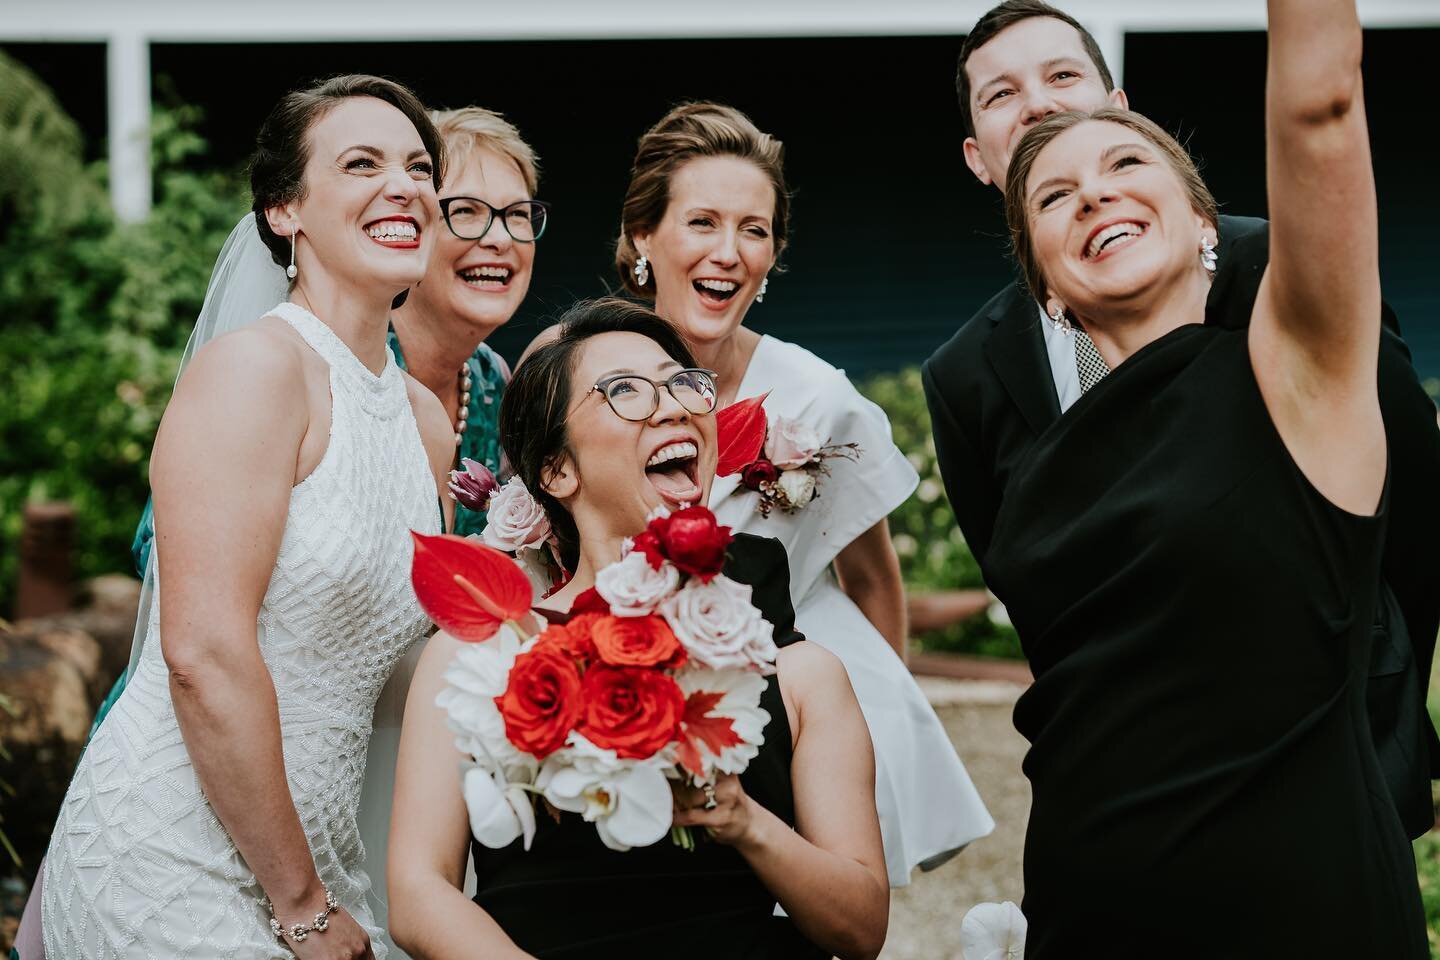 Gotta love a wedding selfie

Pic: @anchorandhopephotography 
Venue: @Projekt3488
Celebrant: @celebrantkate 
Florals: me ❤️

#yarravalleywedding
#yarravalleyweddingflorist
#nofloralfoam
#weddingfloristmelbourne
#melbournebride
#yarravalleyceremony
#no